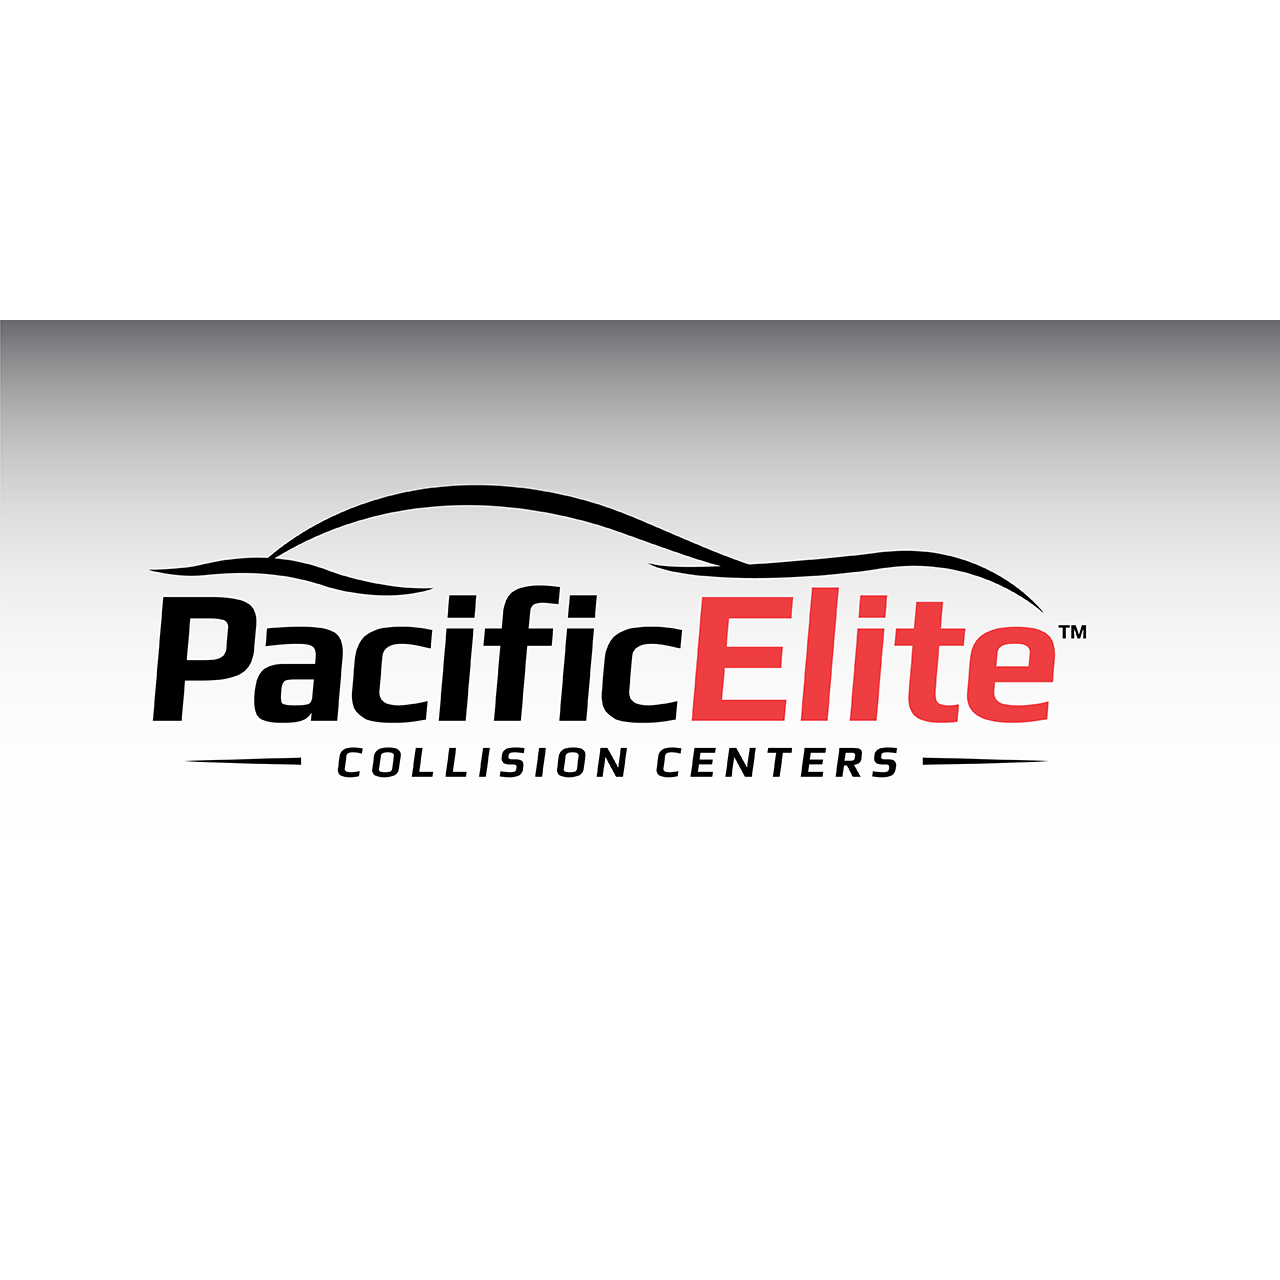 Pacific Elite Collision Centers - Canoga Park Logo